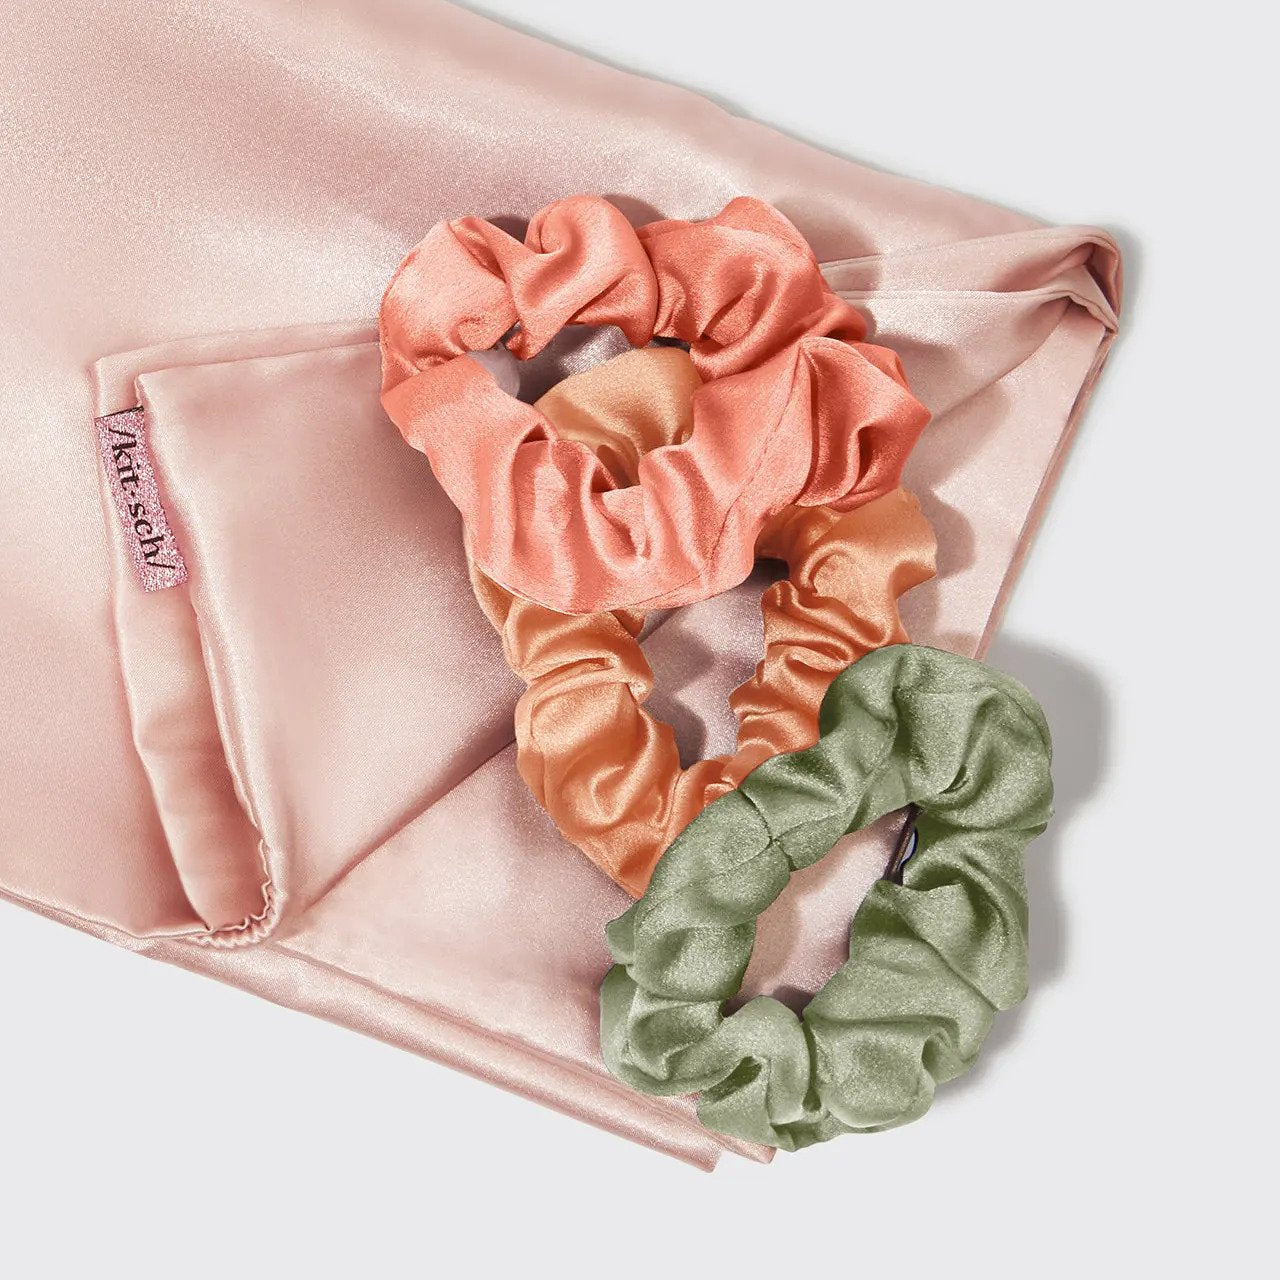 Kitsch Satin Pillowcase & Scrunchie 4pc Set